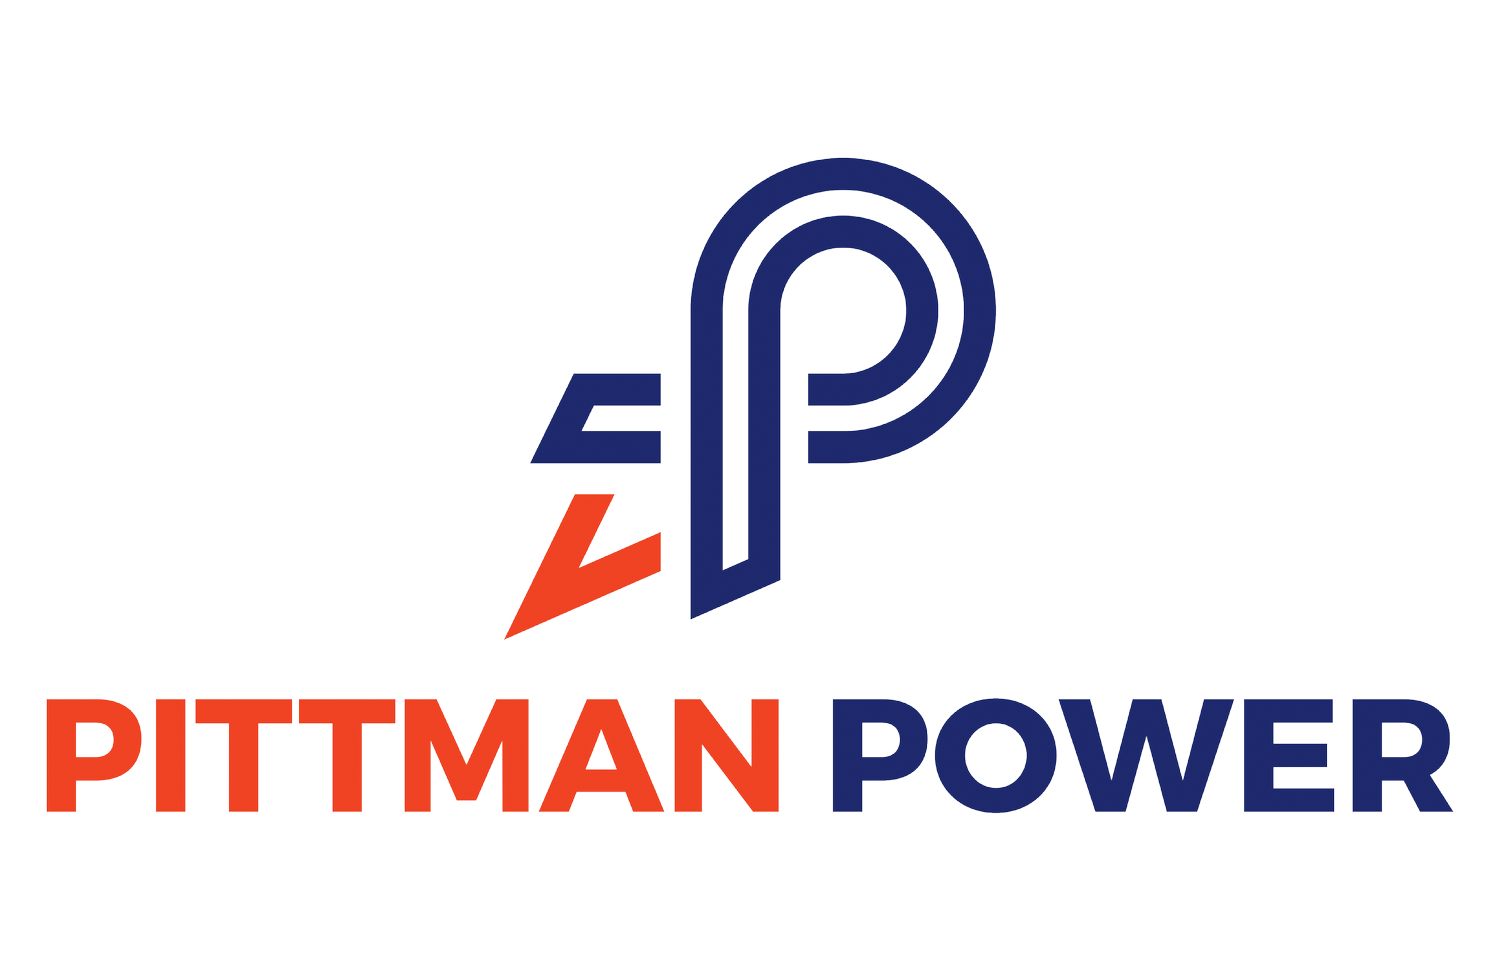 Pittman Power